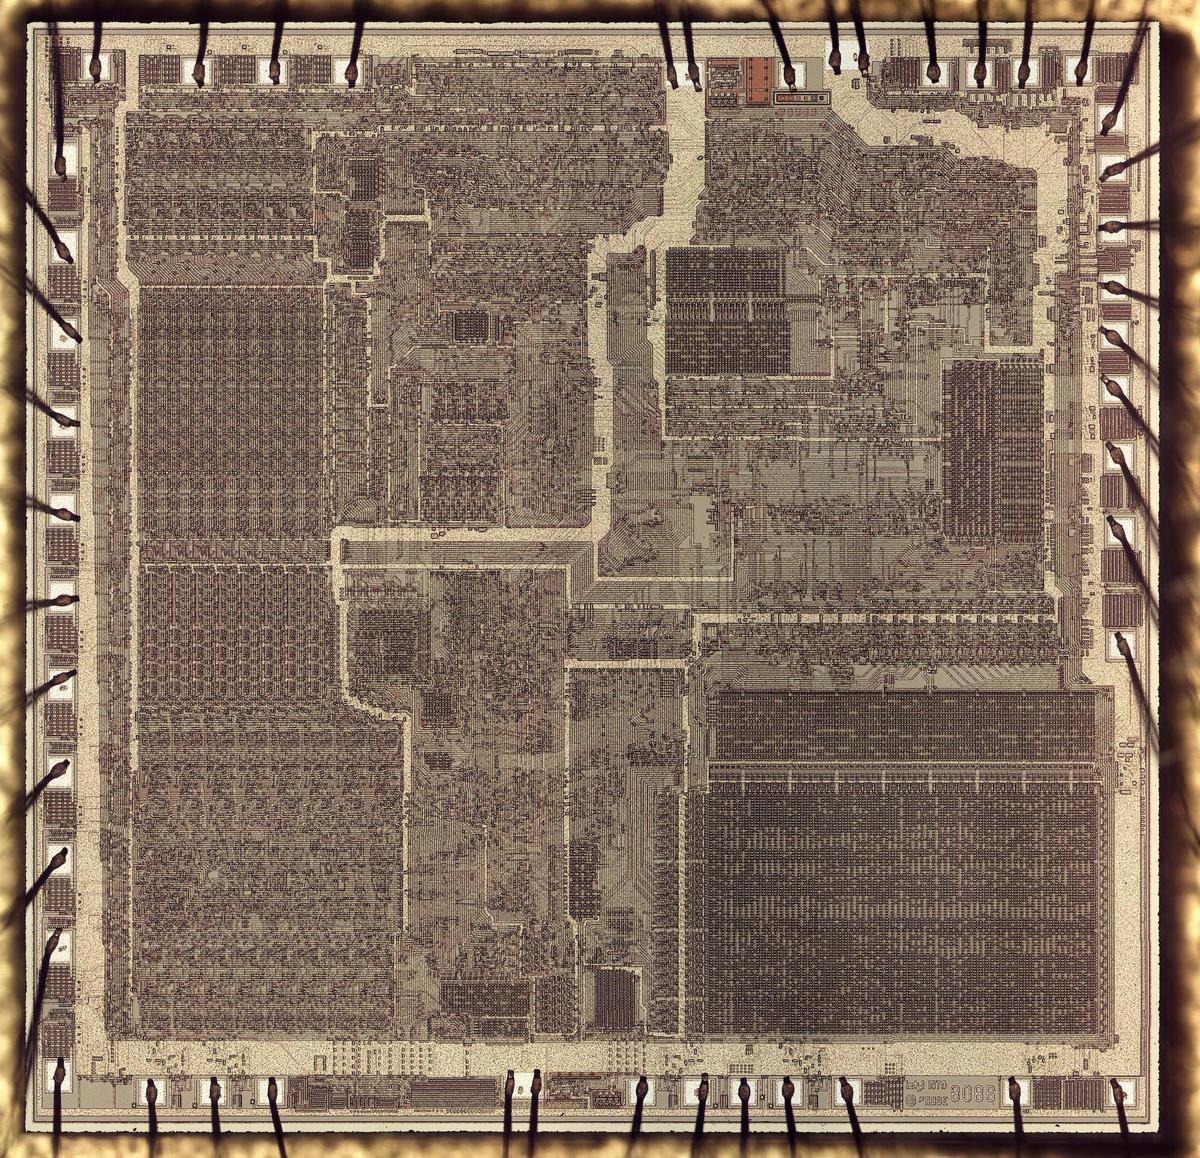 Die photo of a genuine 8086 chip.